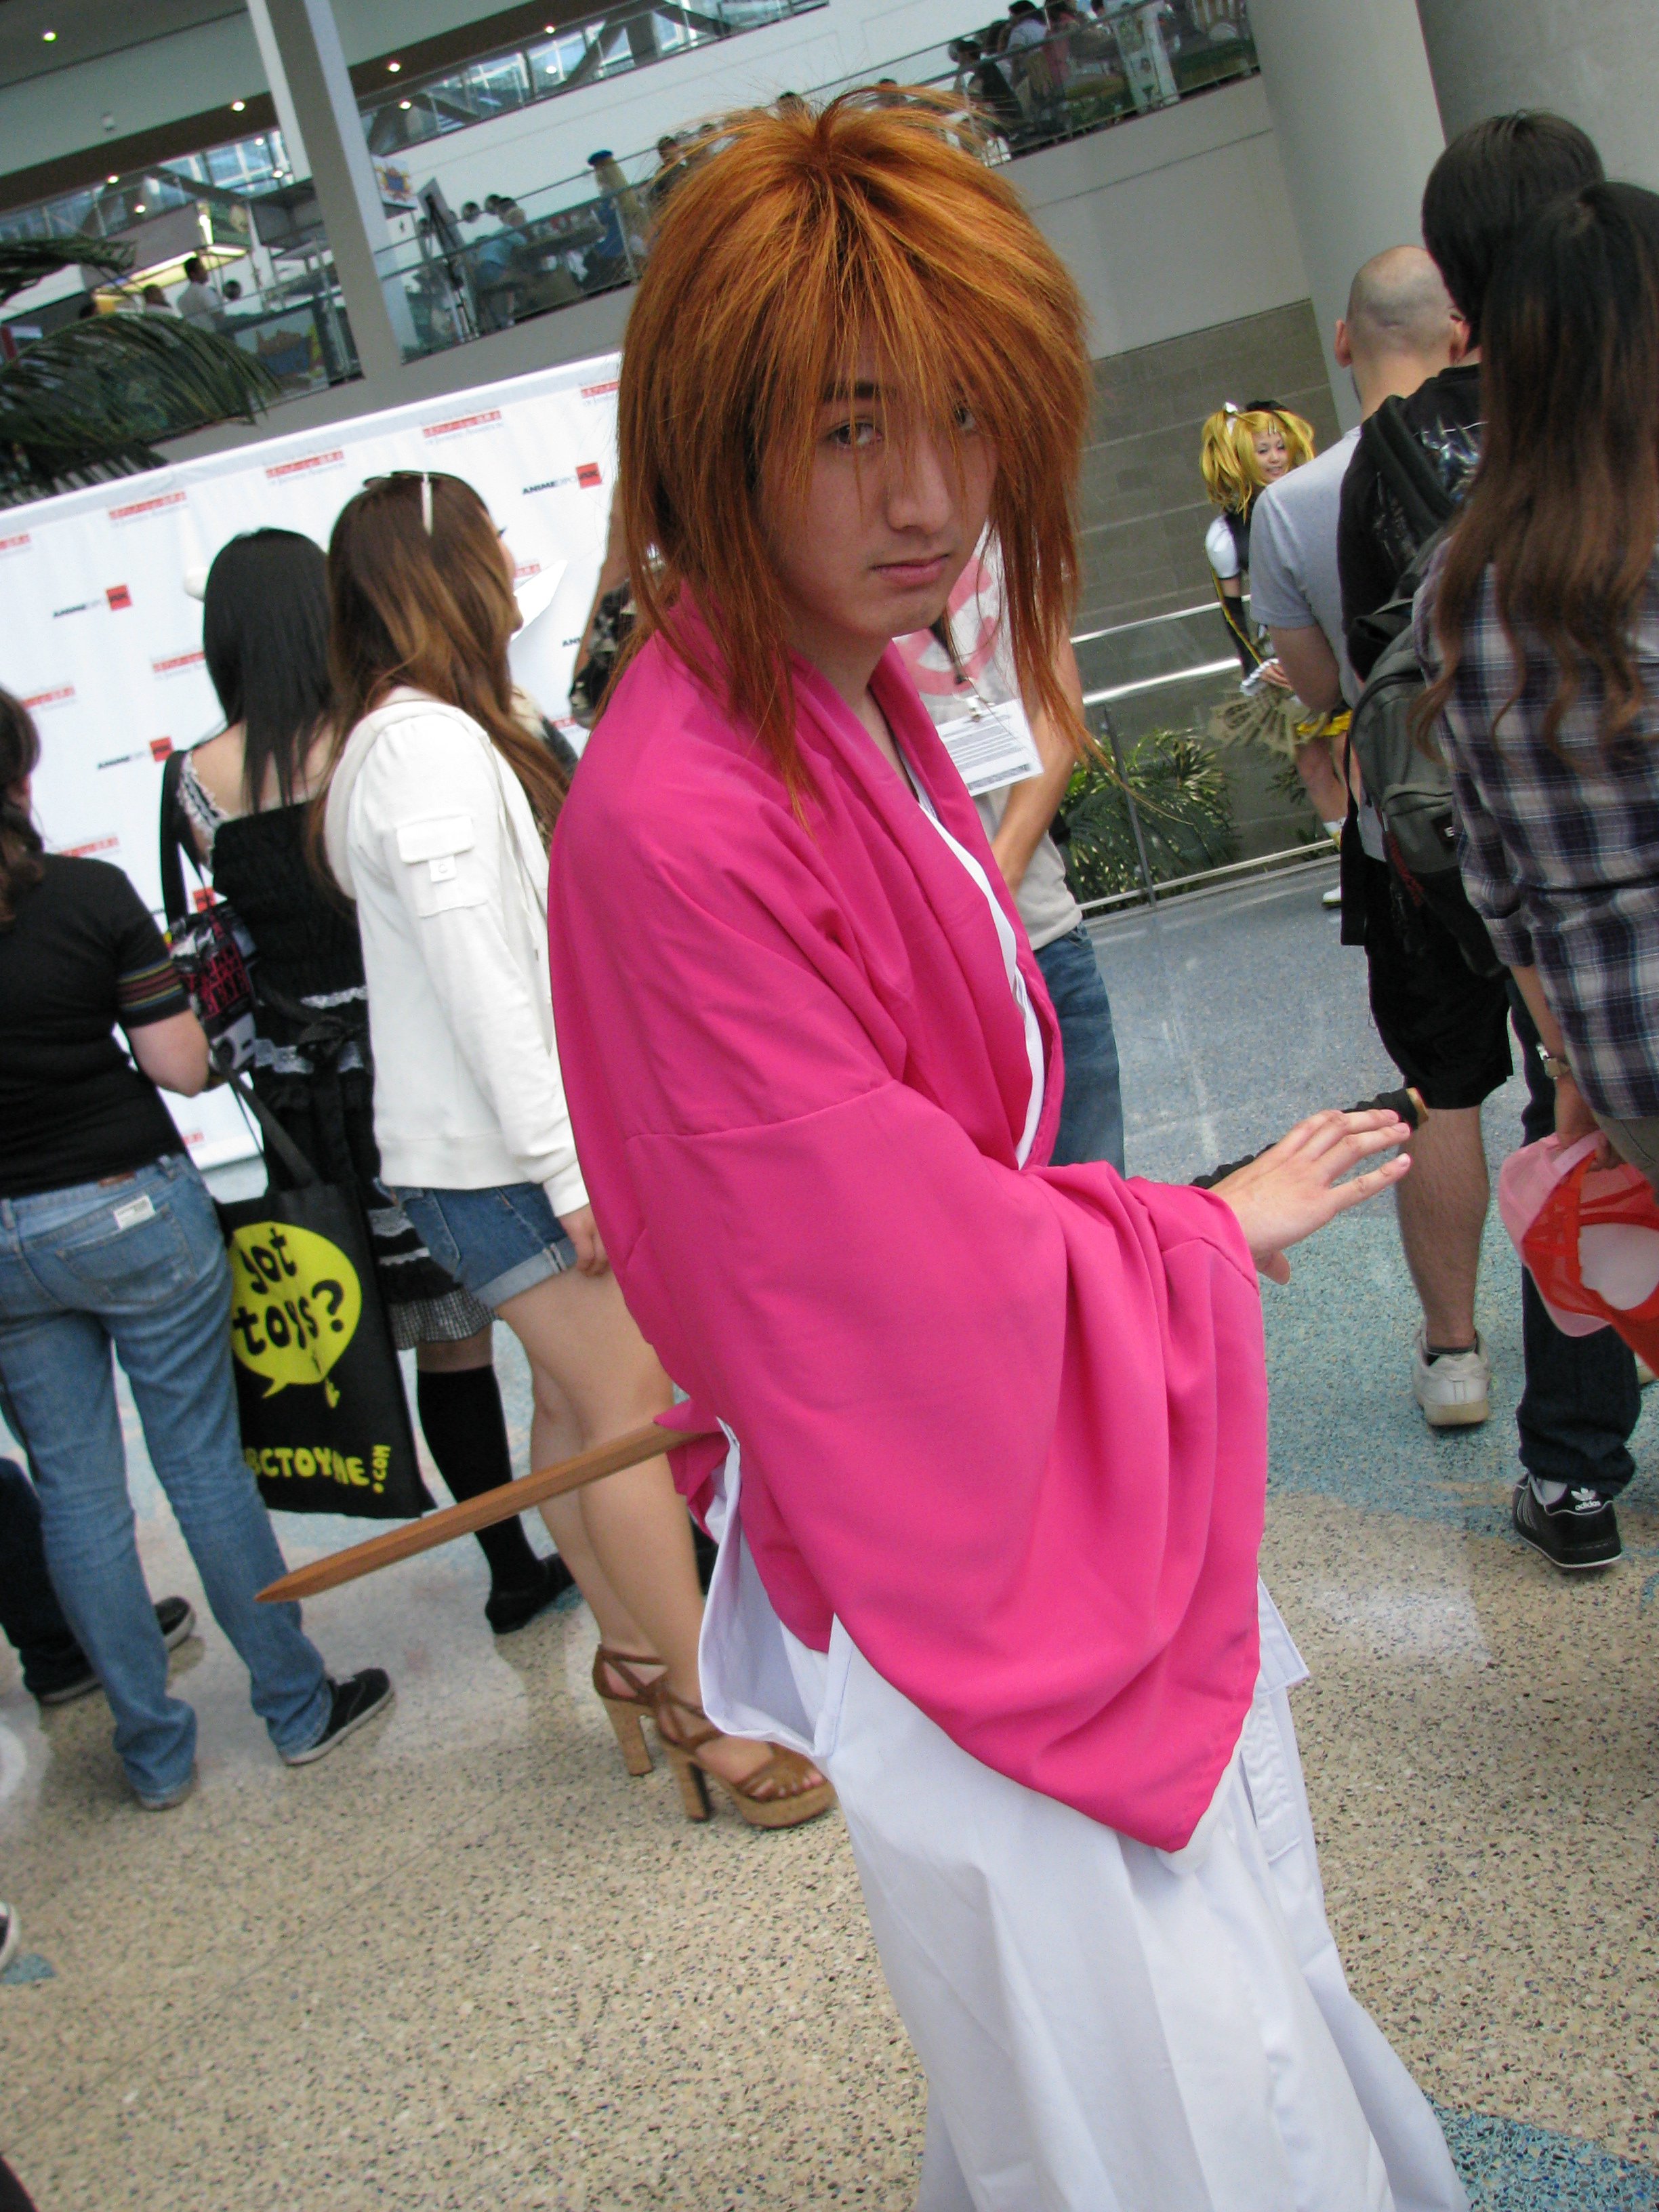 File:Cosplayer of Himura Kenshin, Rurouni Kenshin at Anime Expo  20110701.jpg - Wikimedia Commons